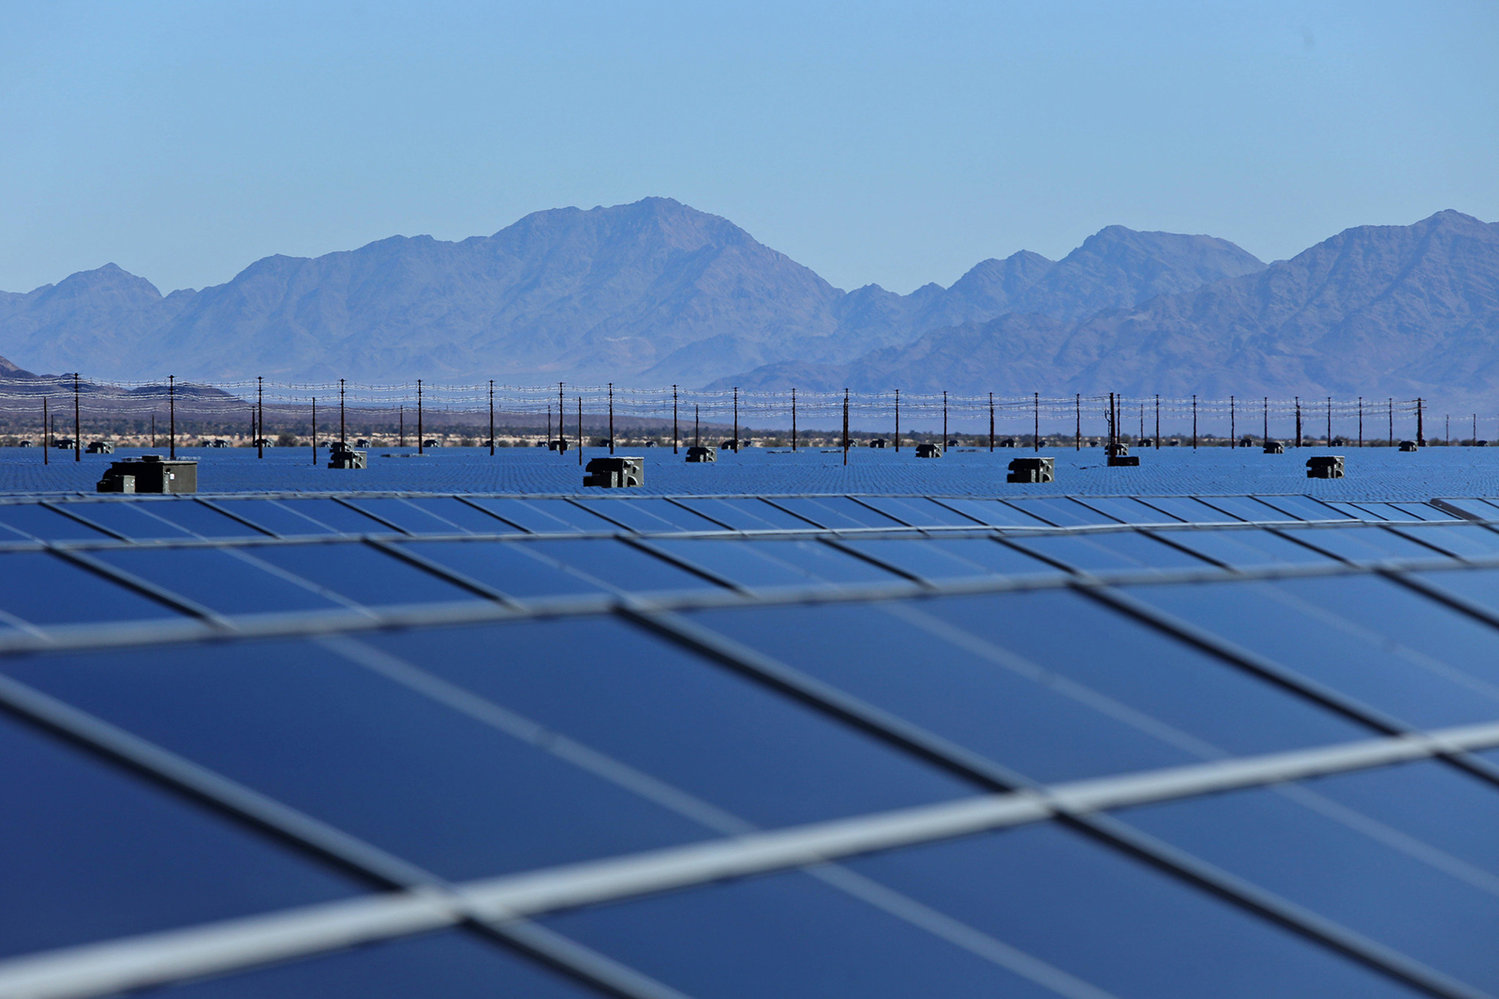 The 550-megawatt Desert Sunlight solar farm in Riverside County, California. (Marcus Yam/Los Angeles Times/TNS)